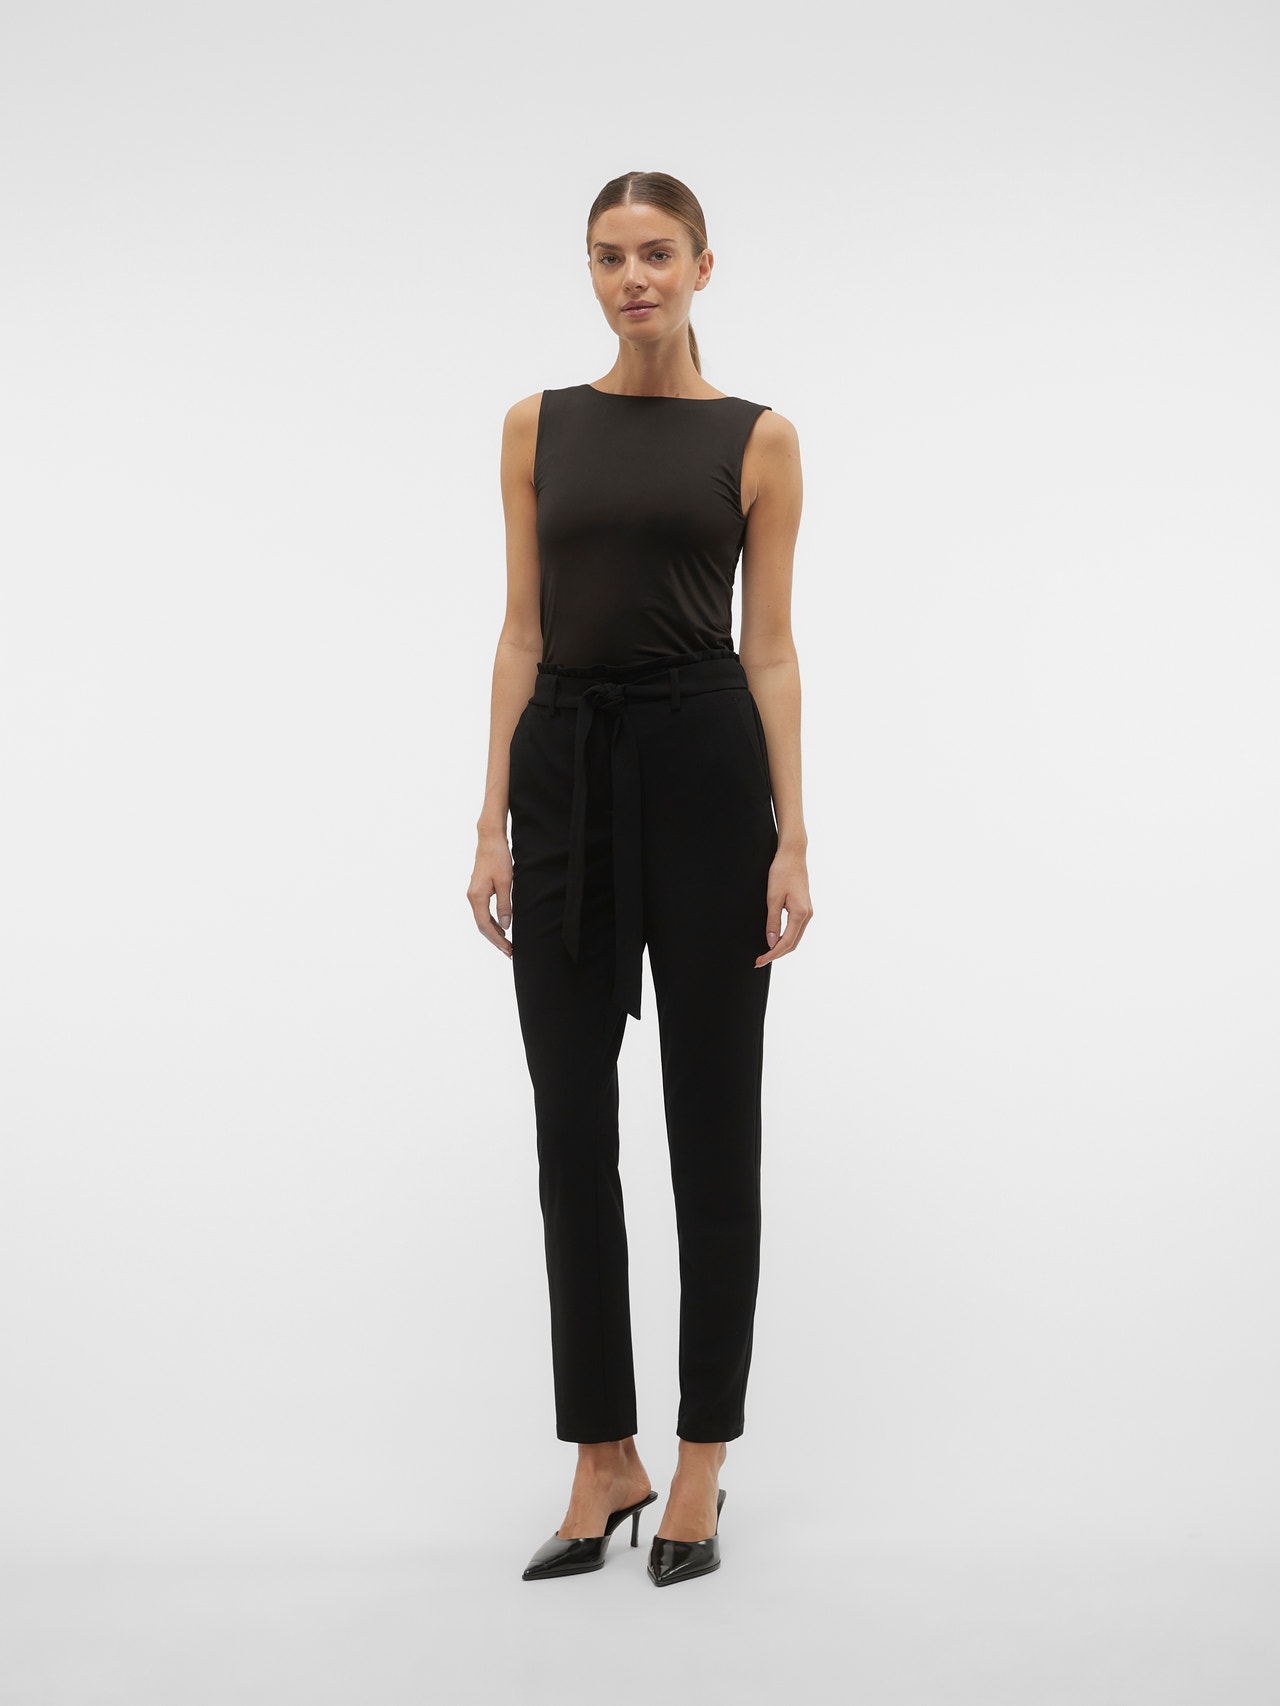 Vero Moda VMLIVA Spodnie -Black - 10301598